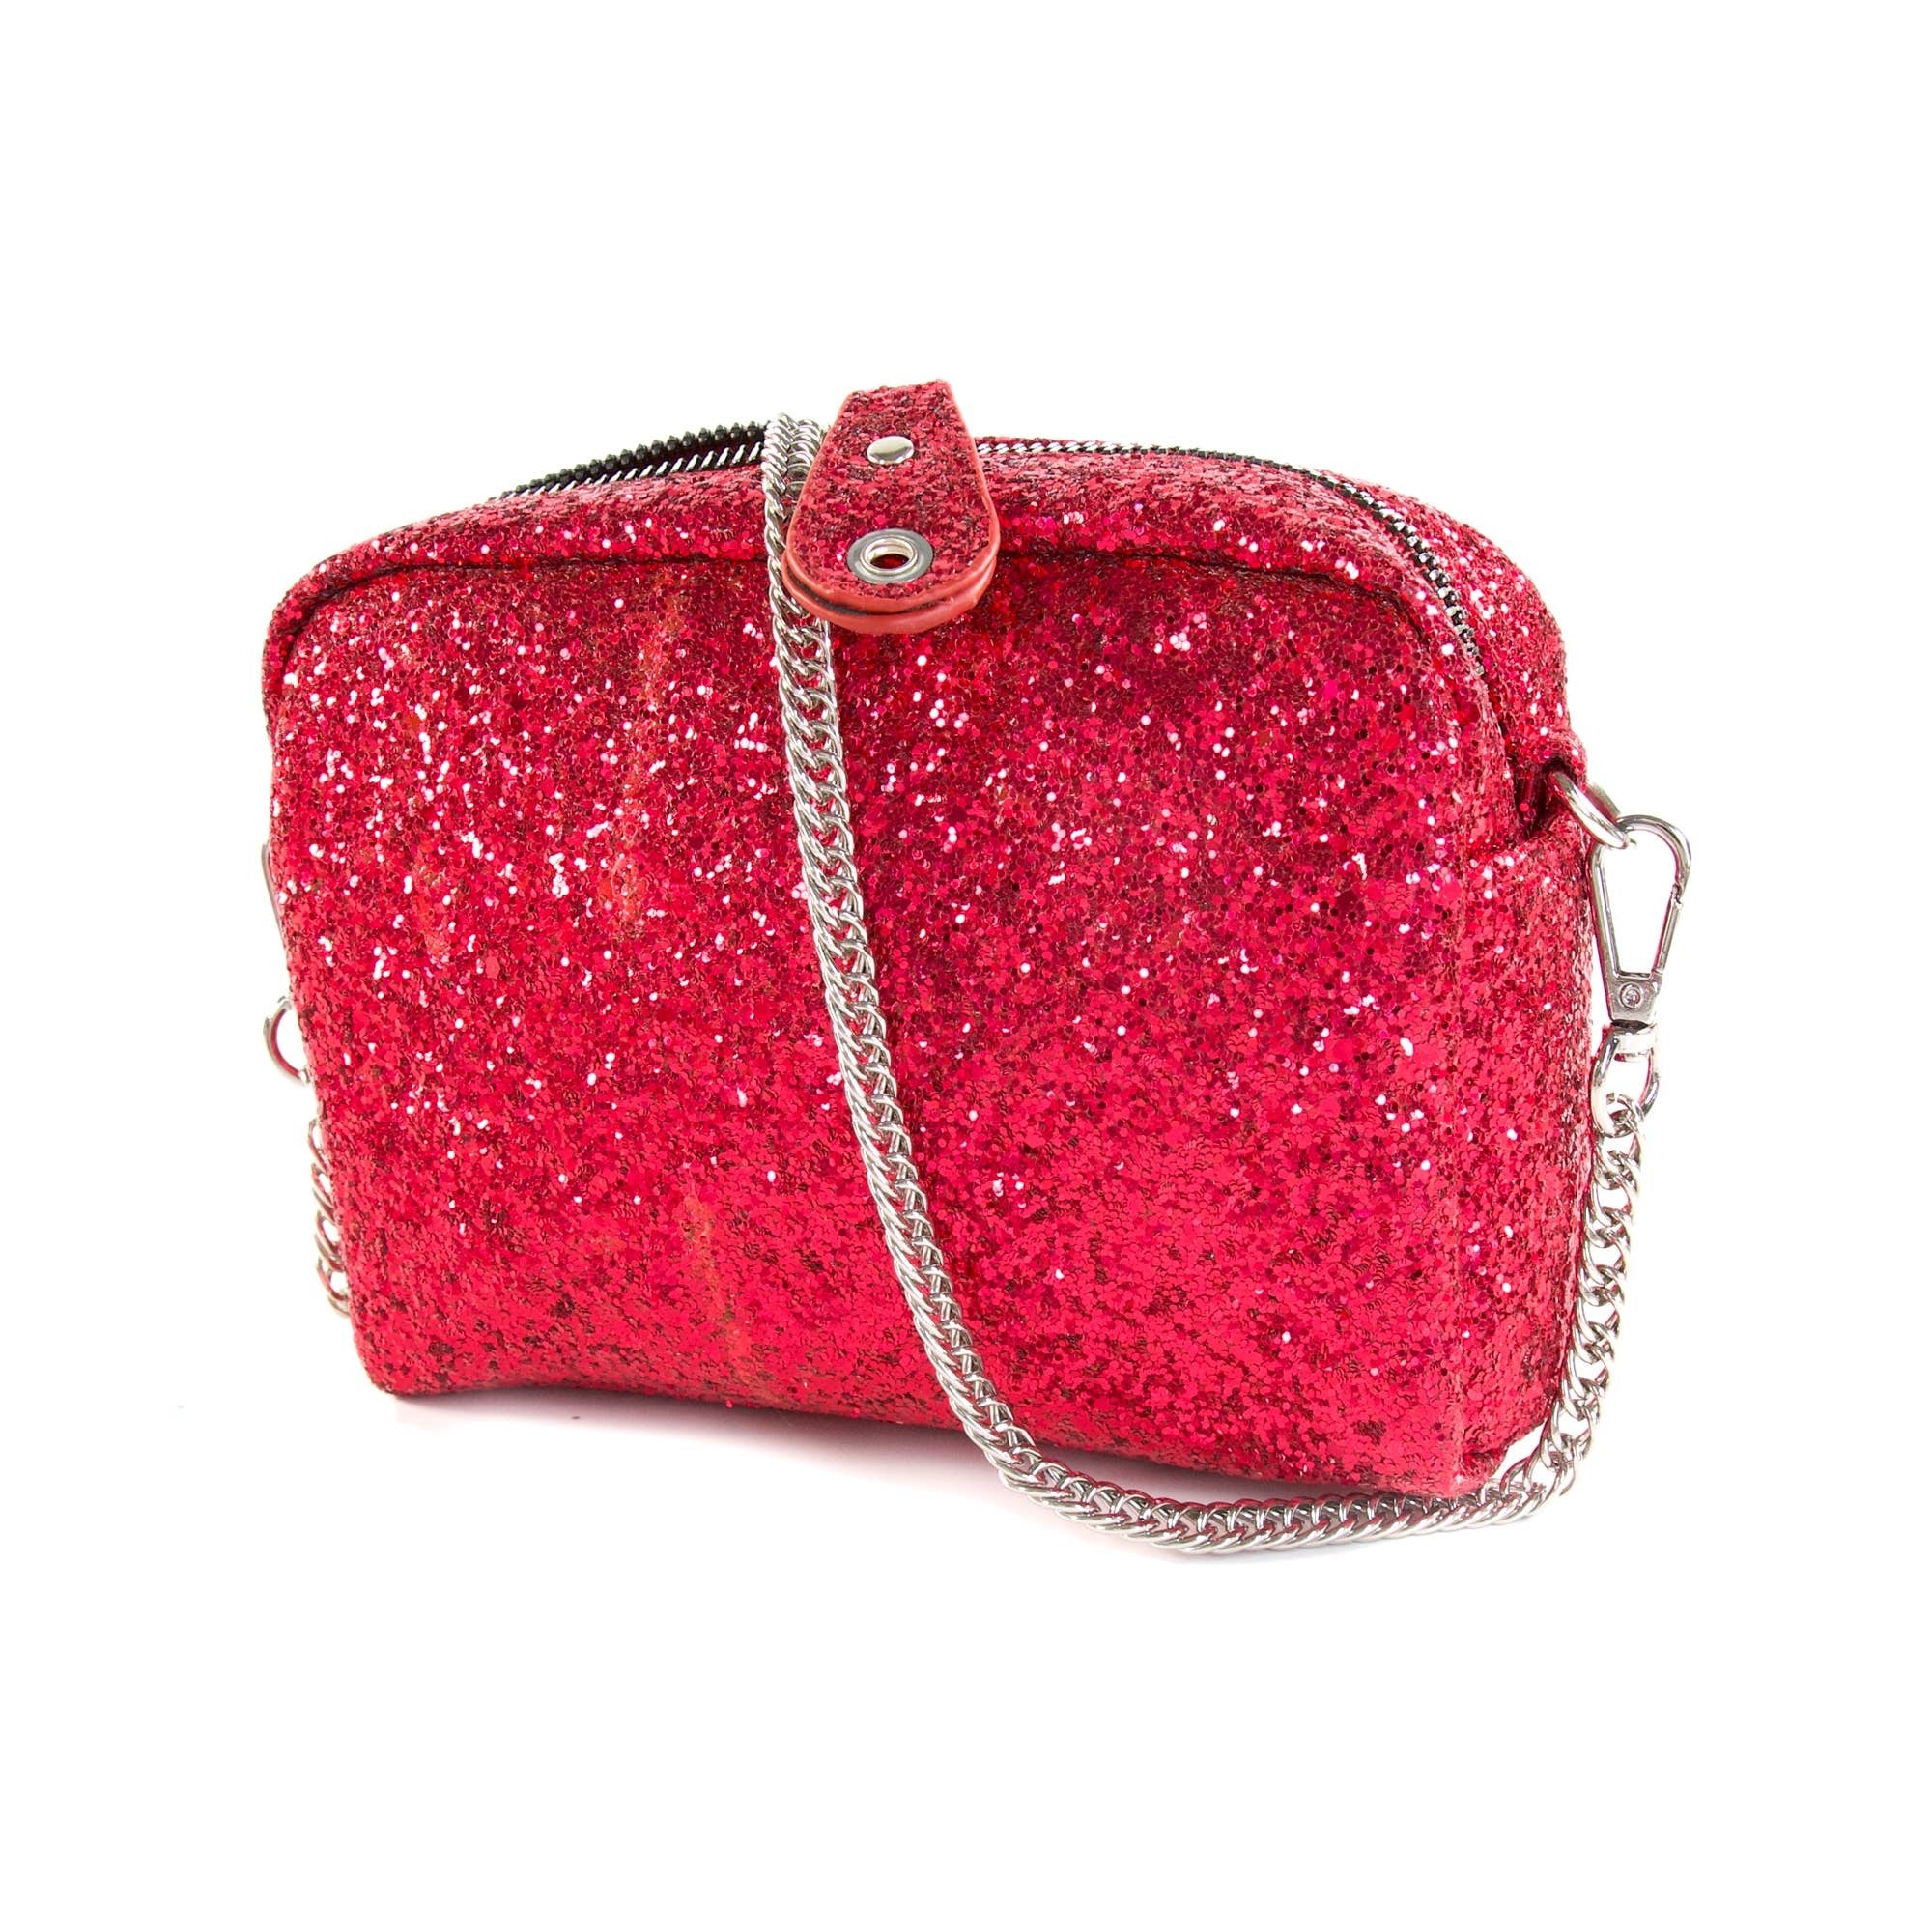 Bewaltz - Hot Pink - Fancy Glitter Crossbody Purse with Chain Strap